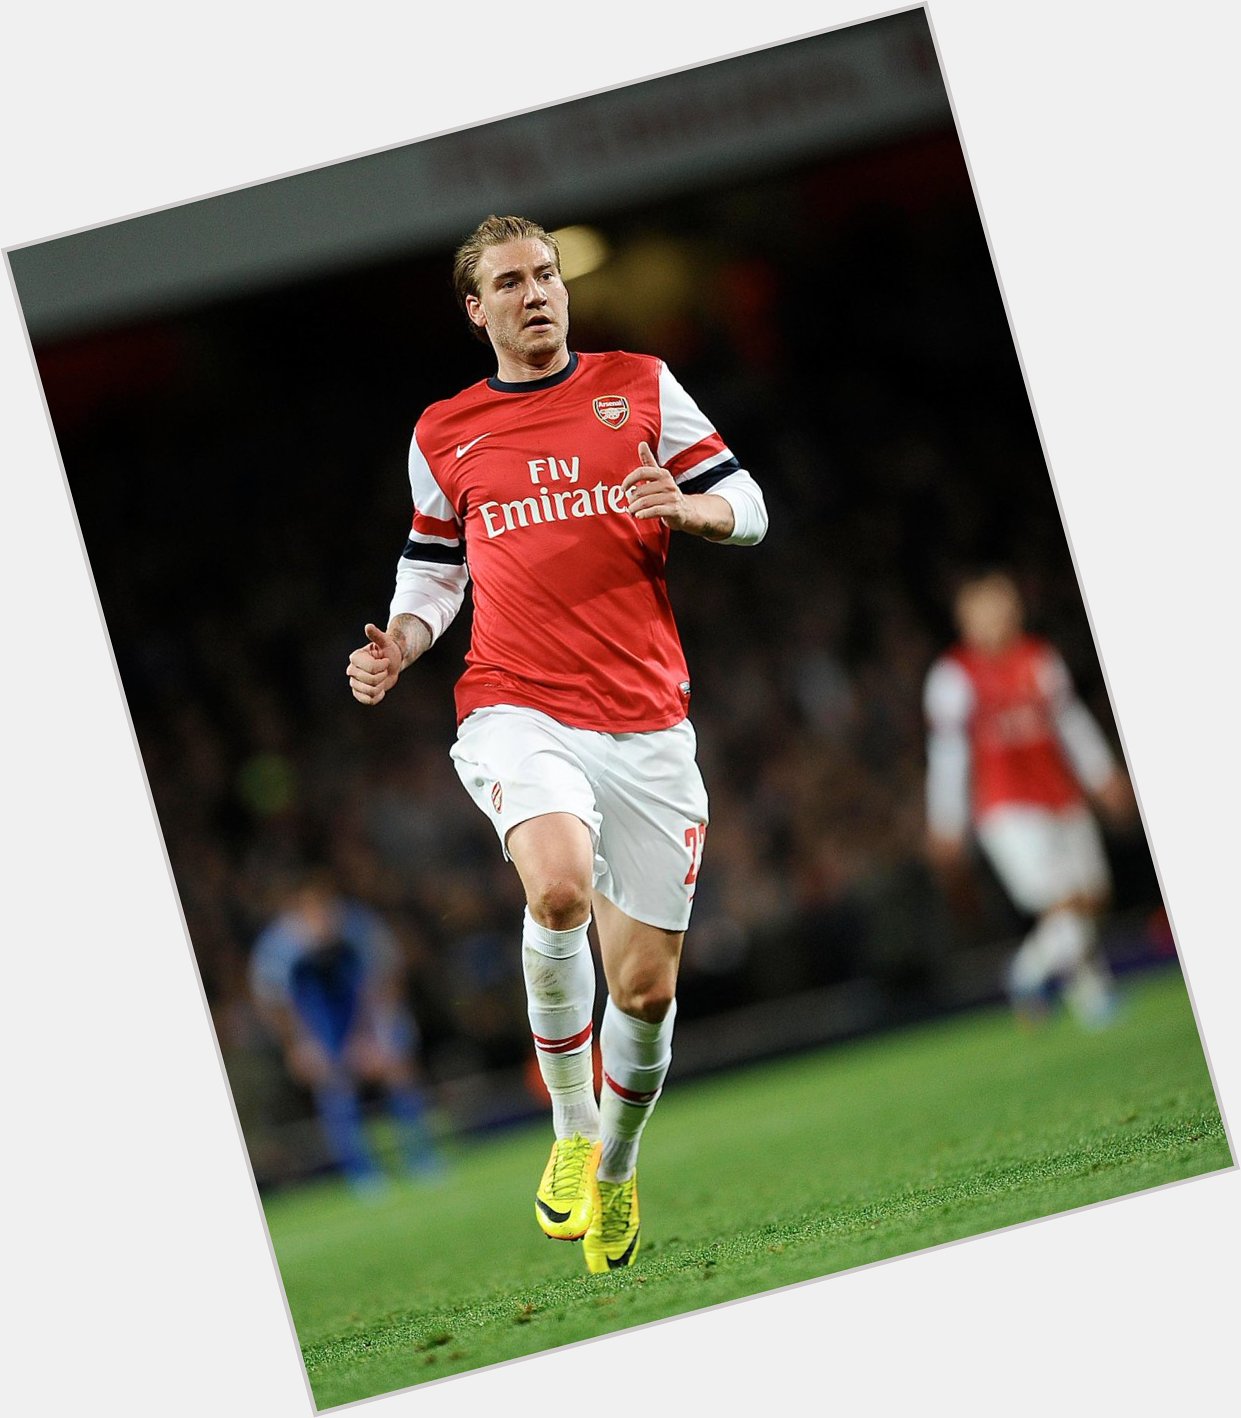 Happy Birthday Nicklas Bendtner  He scored 32 goals in 136 games for Arsenal.   